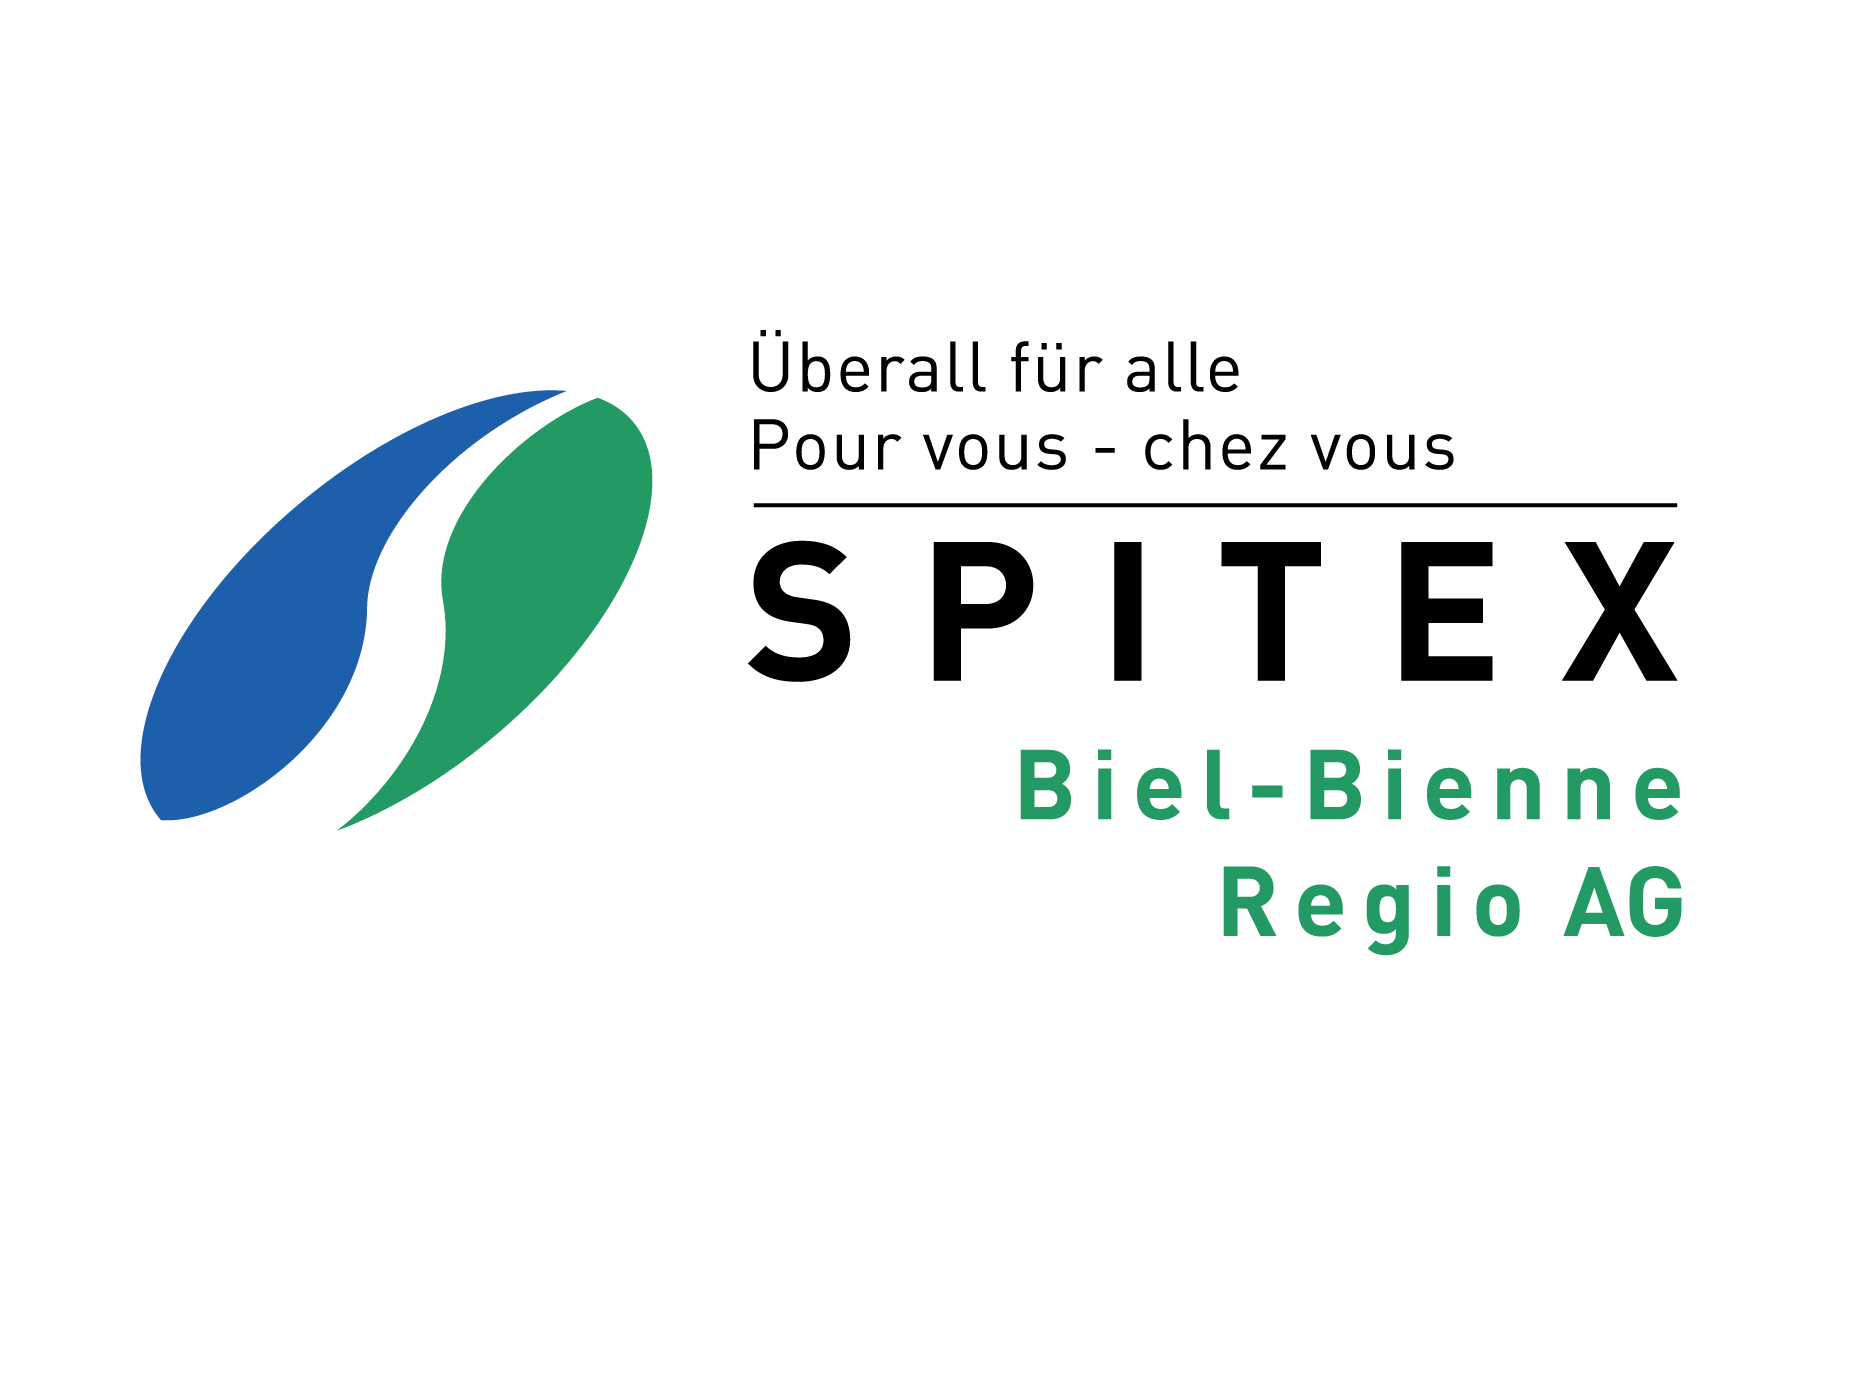 SPITEX Biel-Bienne Regio AG